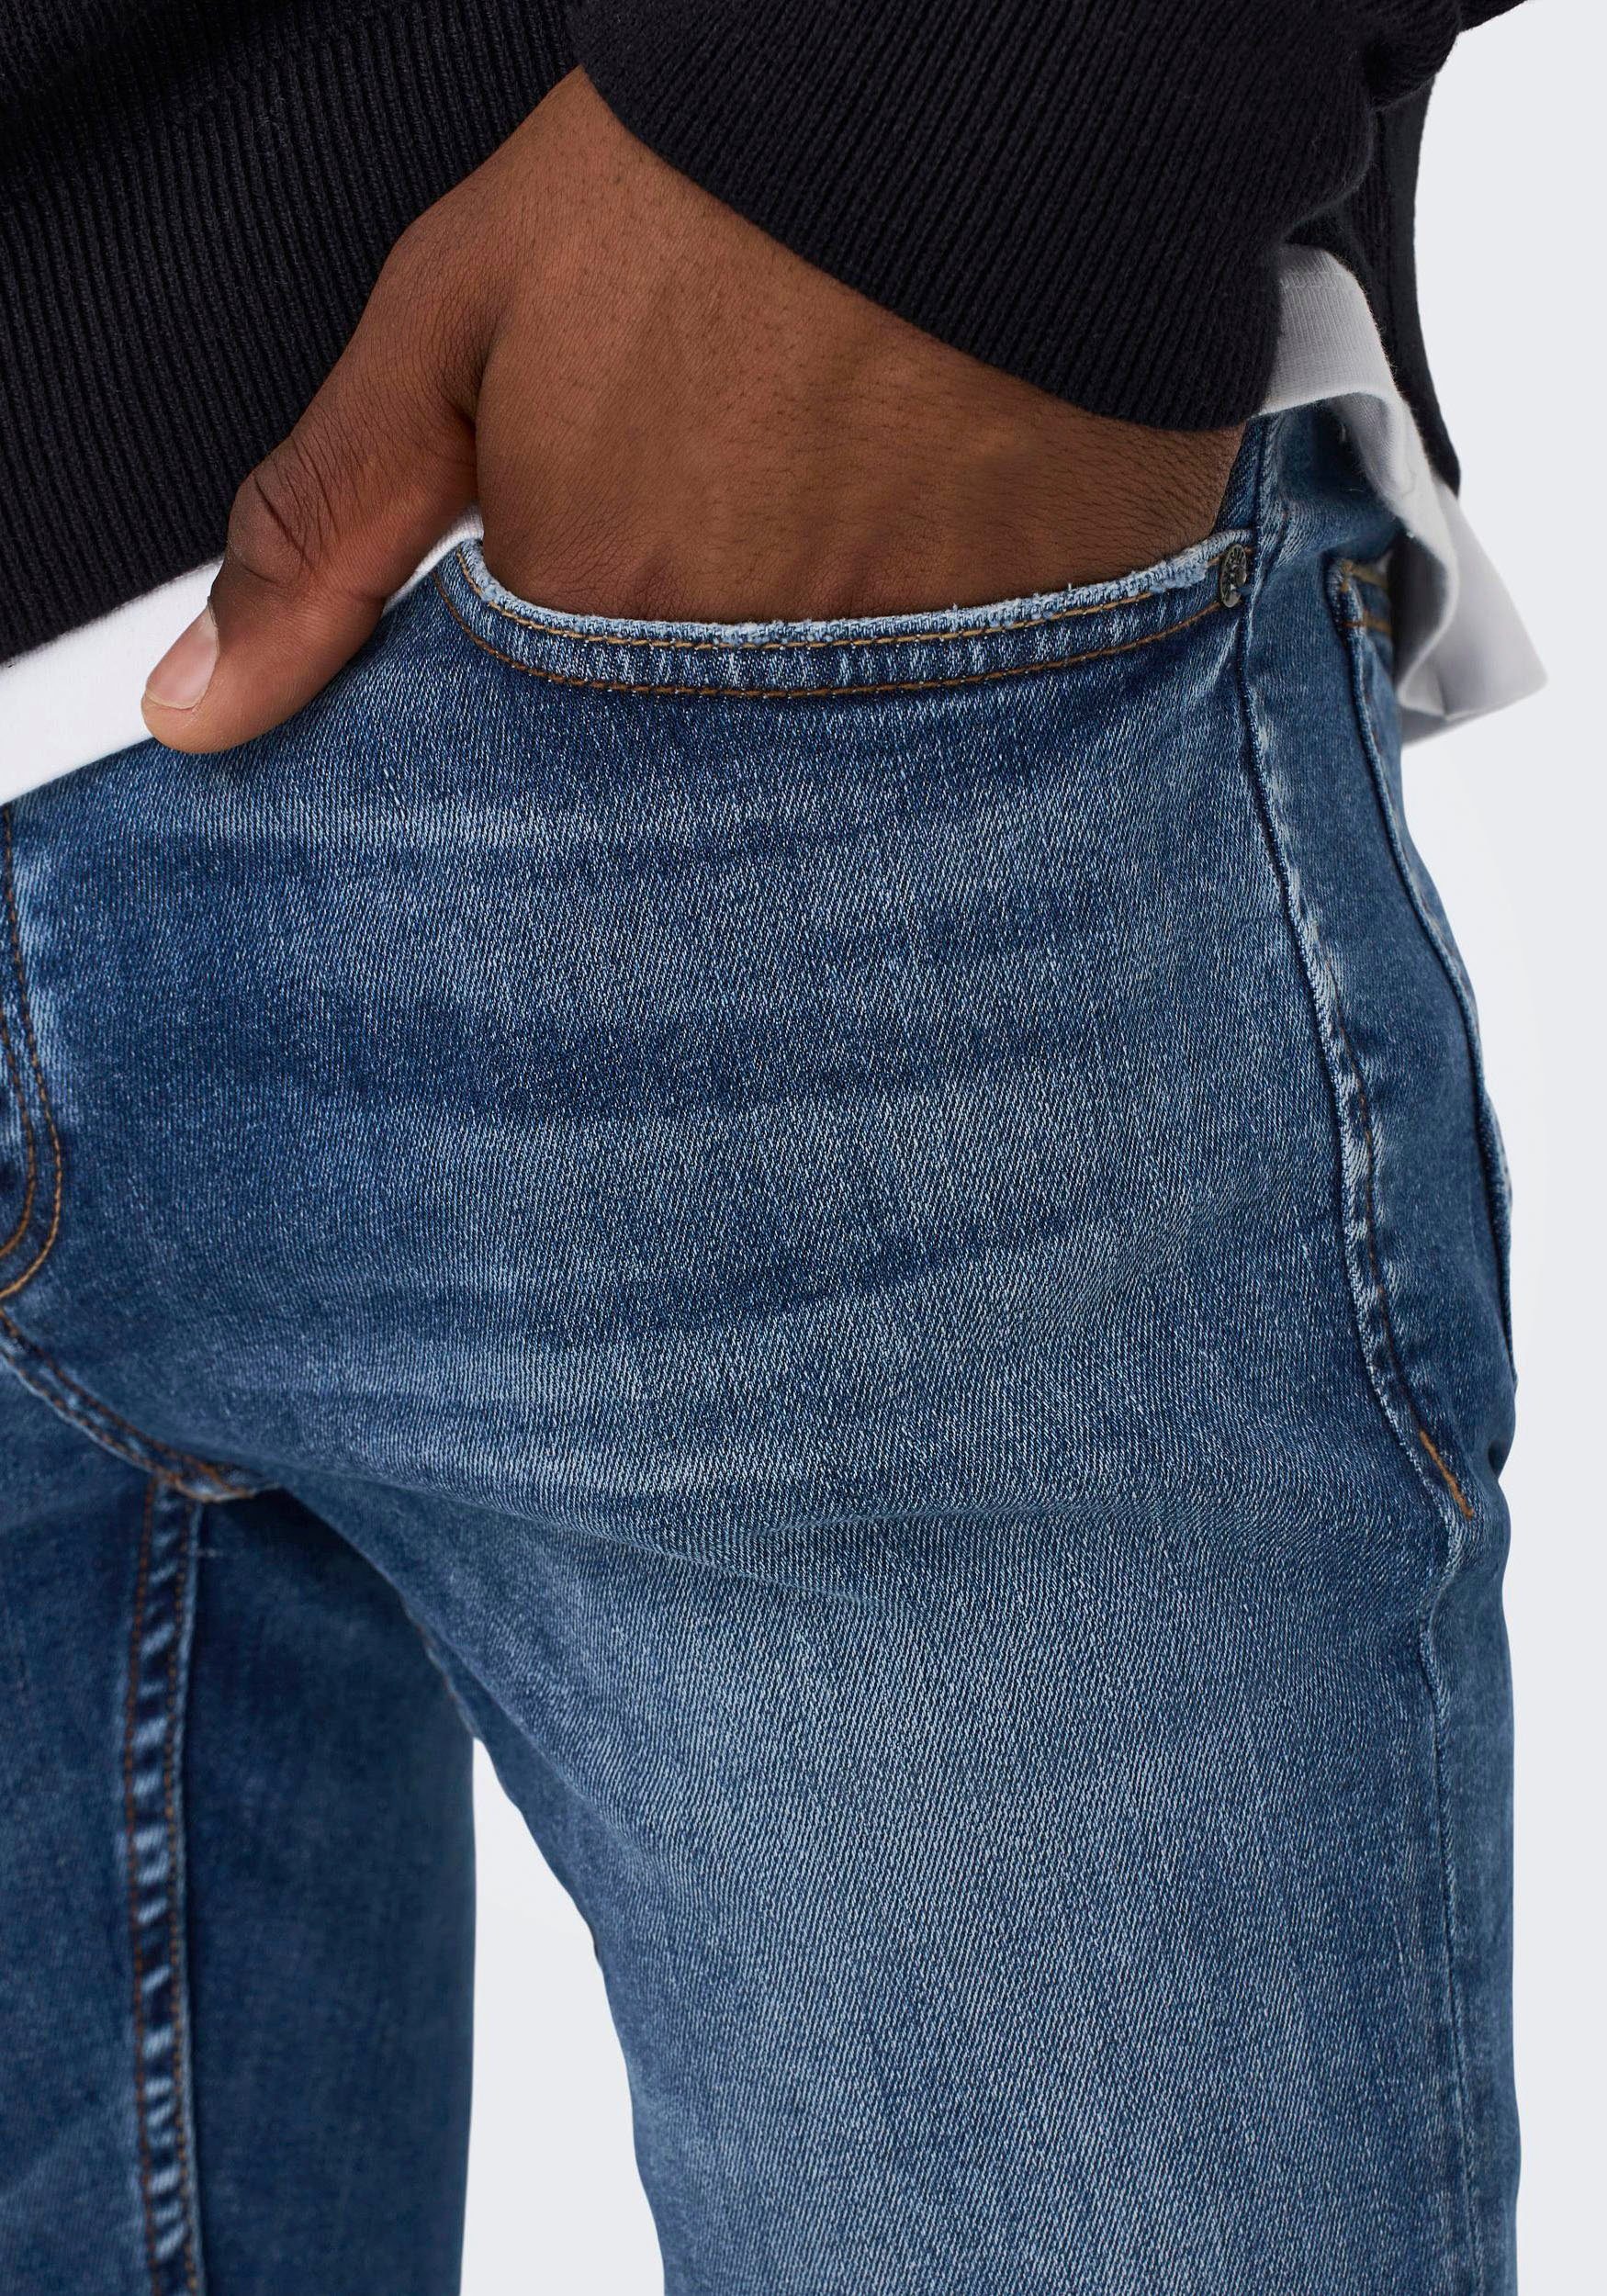 ONLY & SONS Skinny-fit-Jeans blue Warp denim